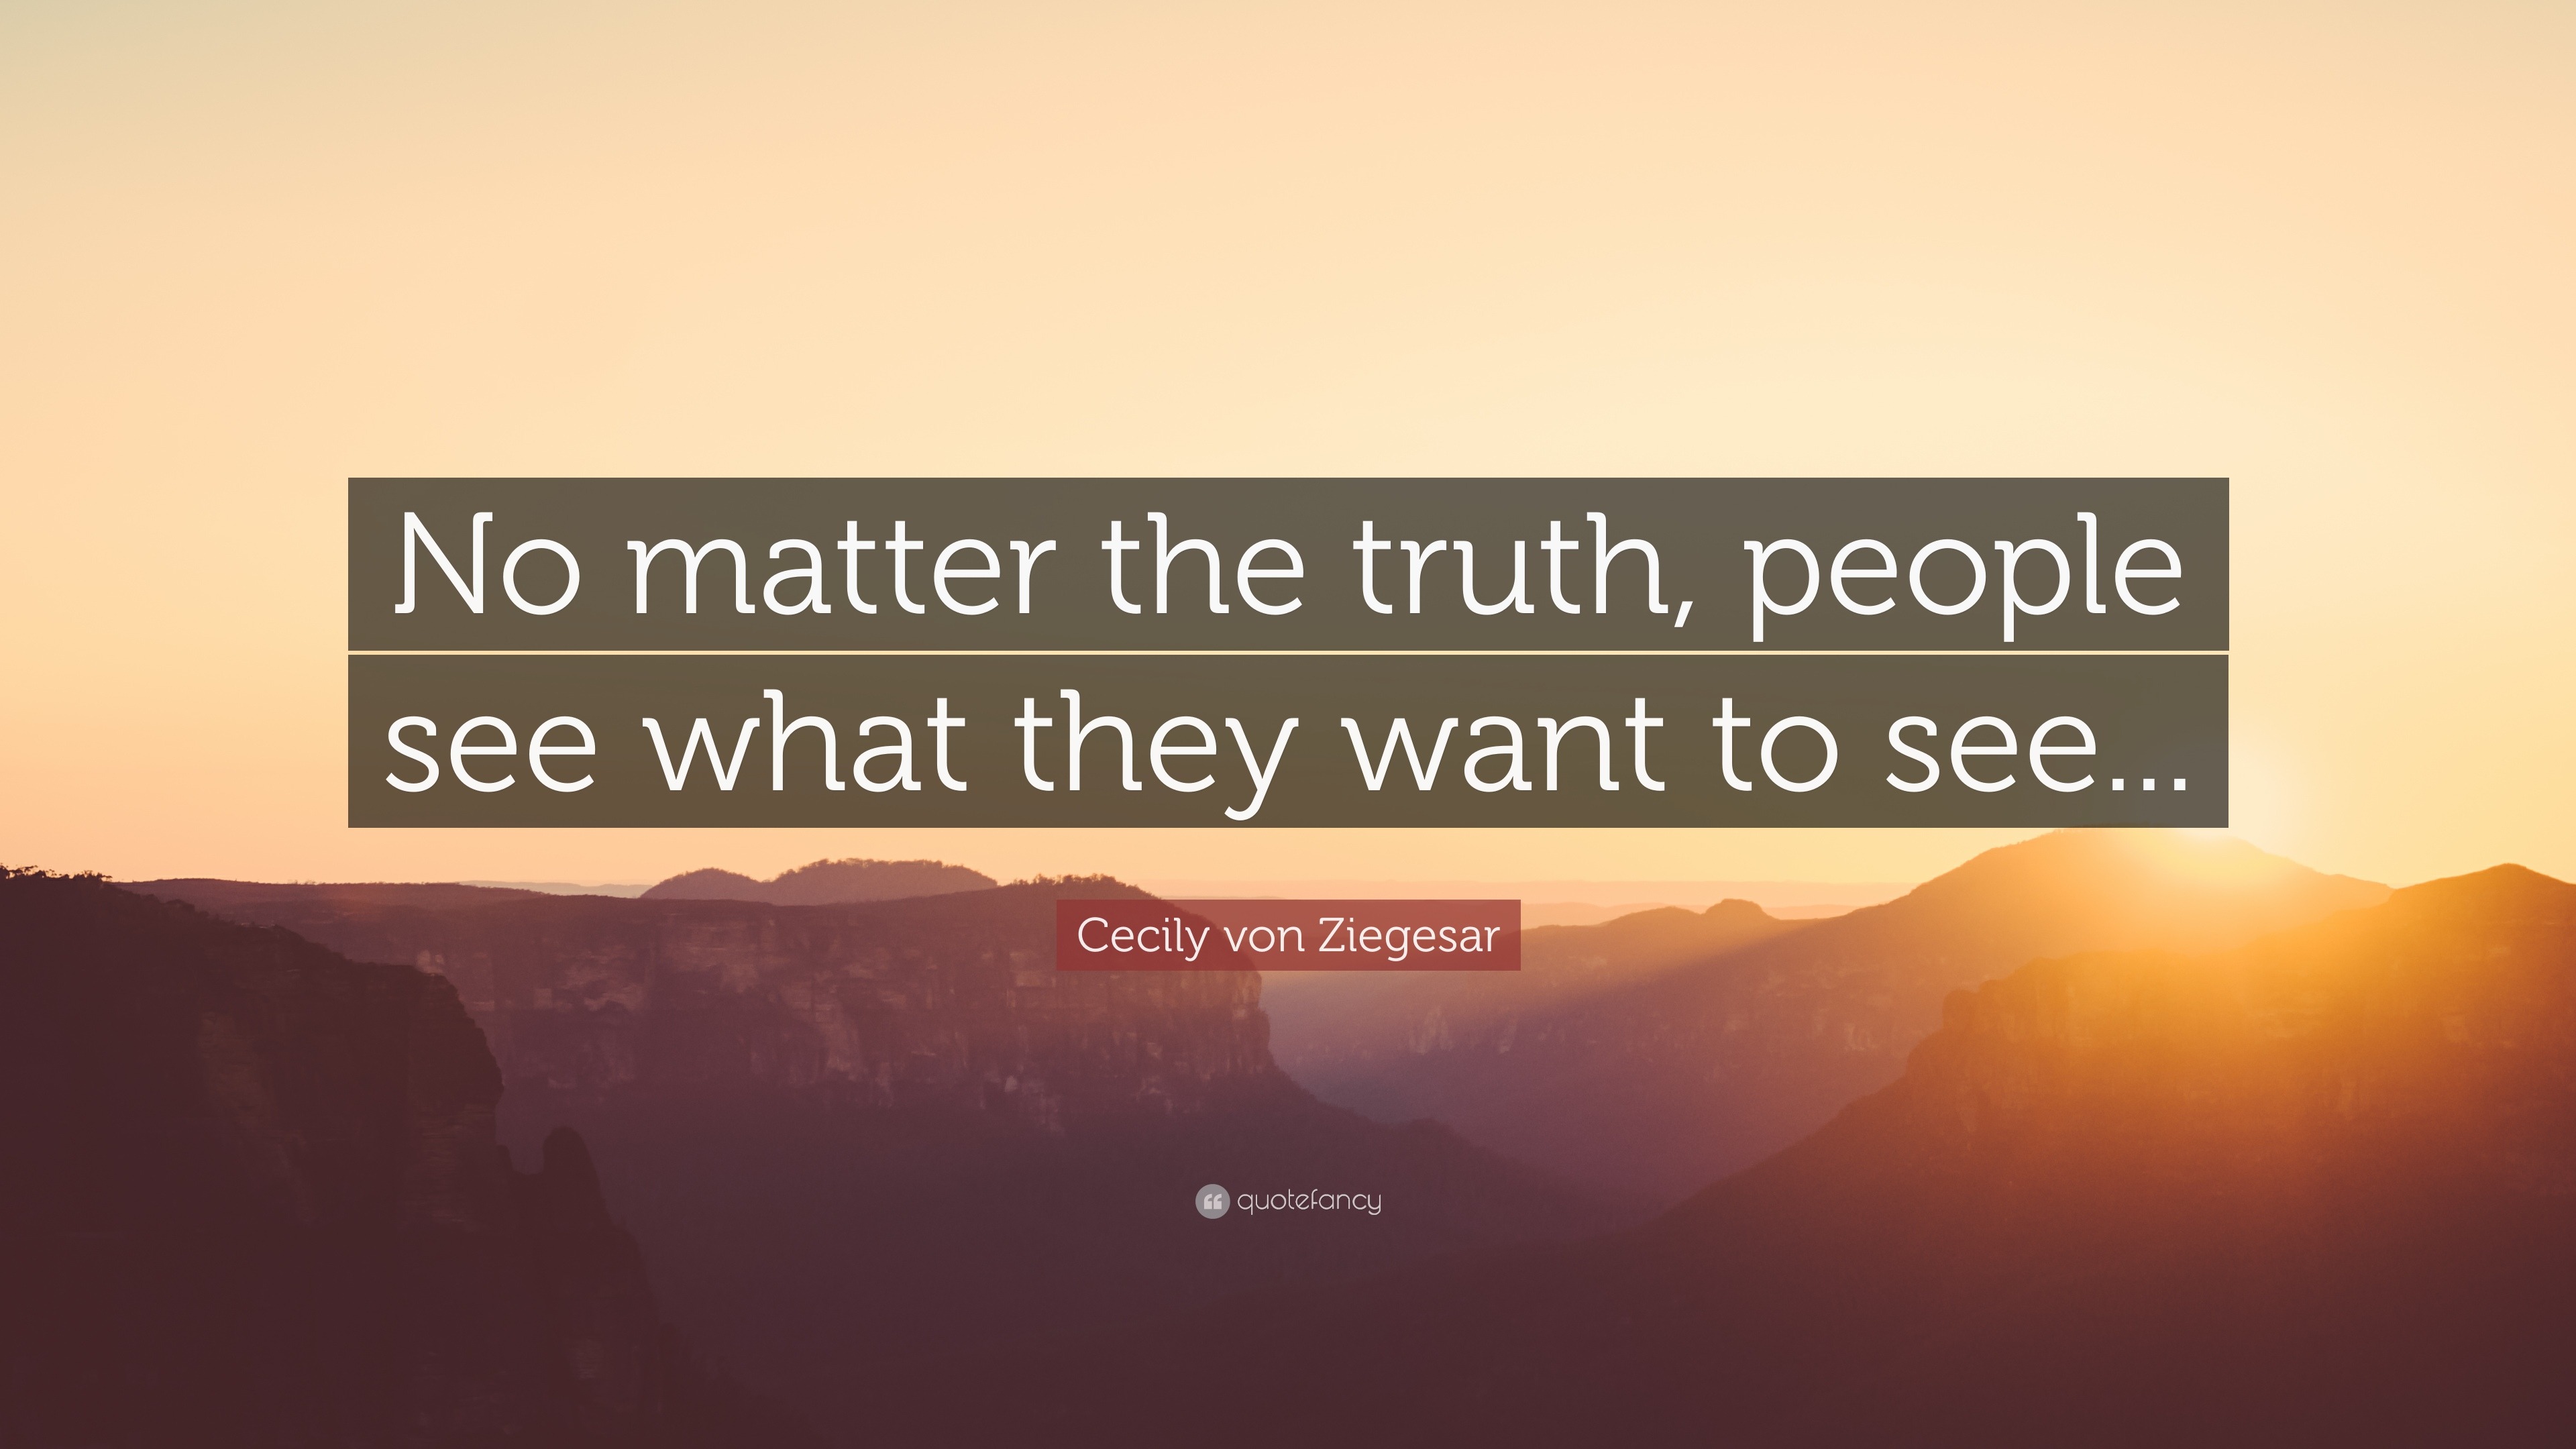 Cecily von Ziegesar Quote: "No matter the truth, people ...